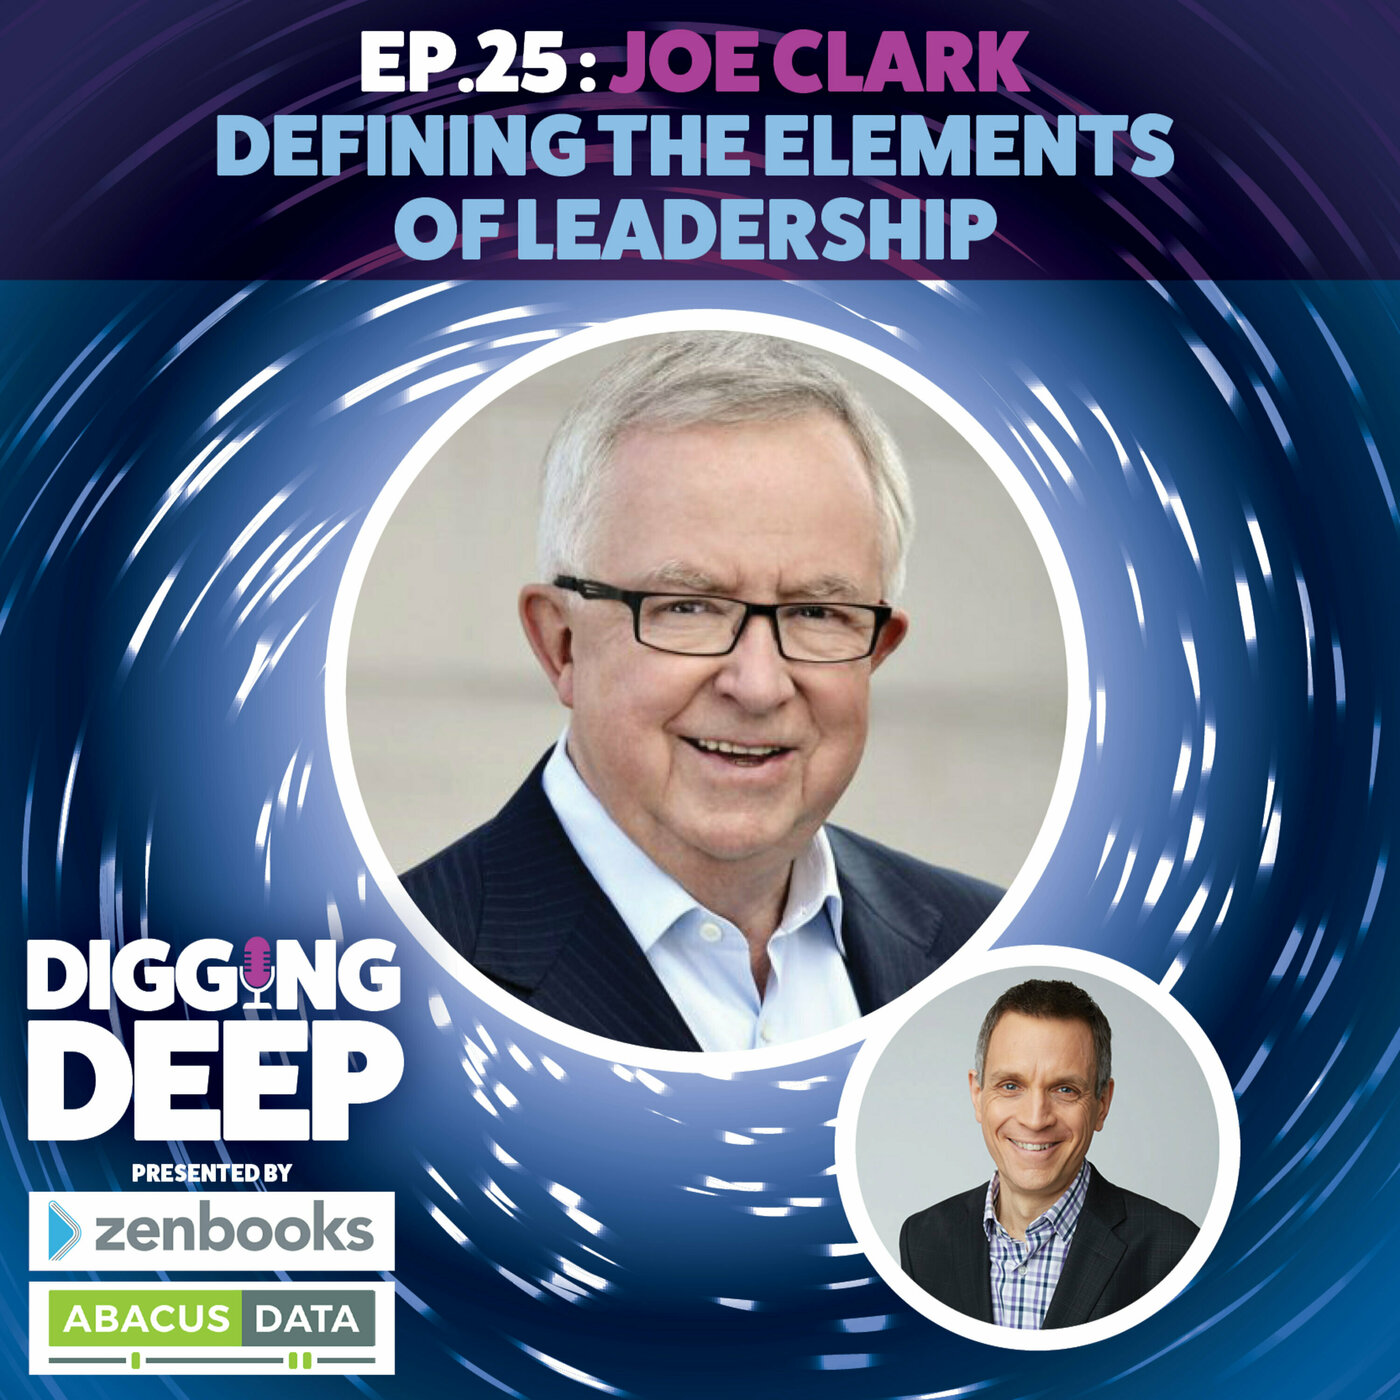 Joe Clark: Defining the Elements of Leadership